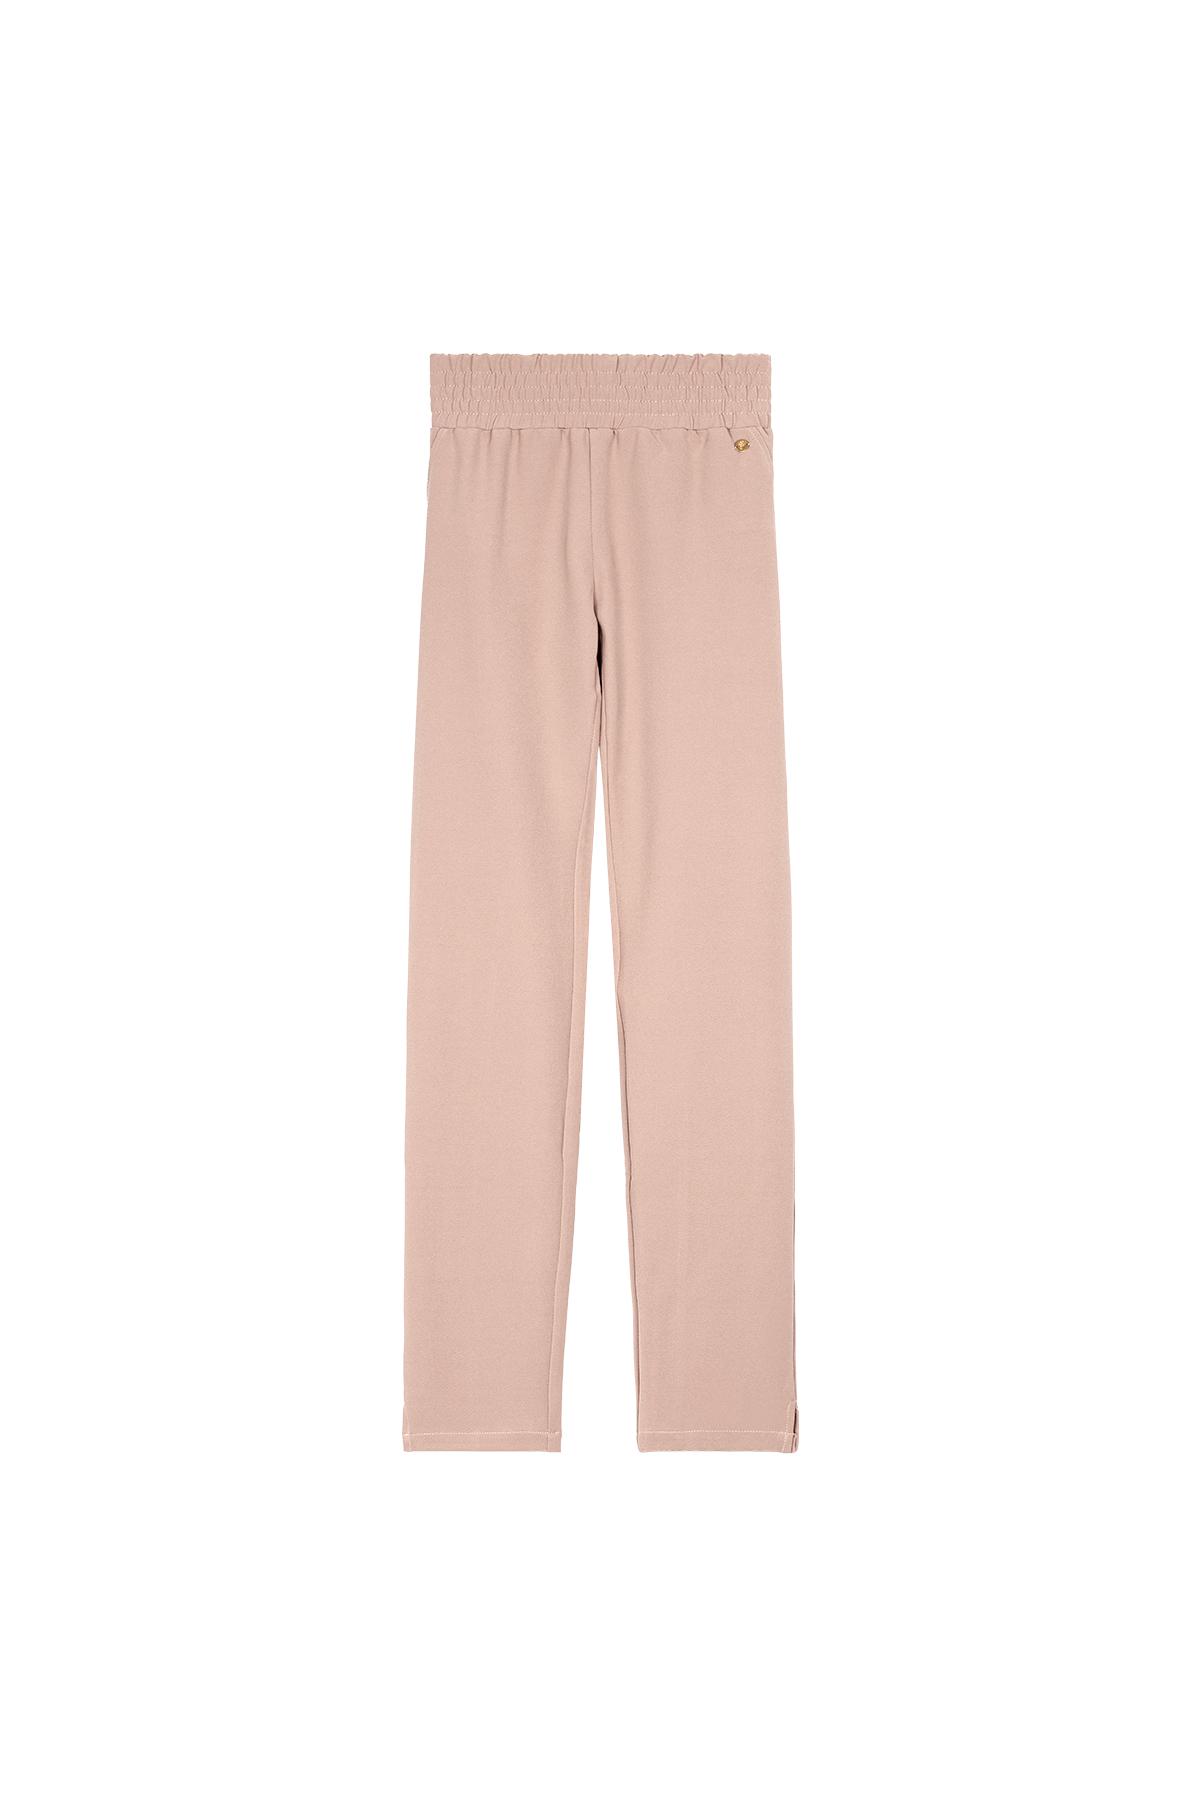 Pantaloni slim fit Pink S 